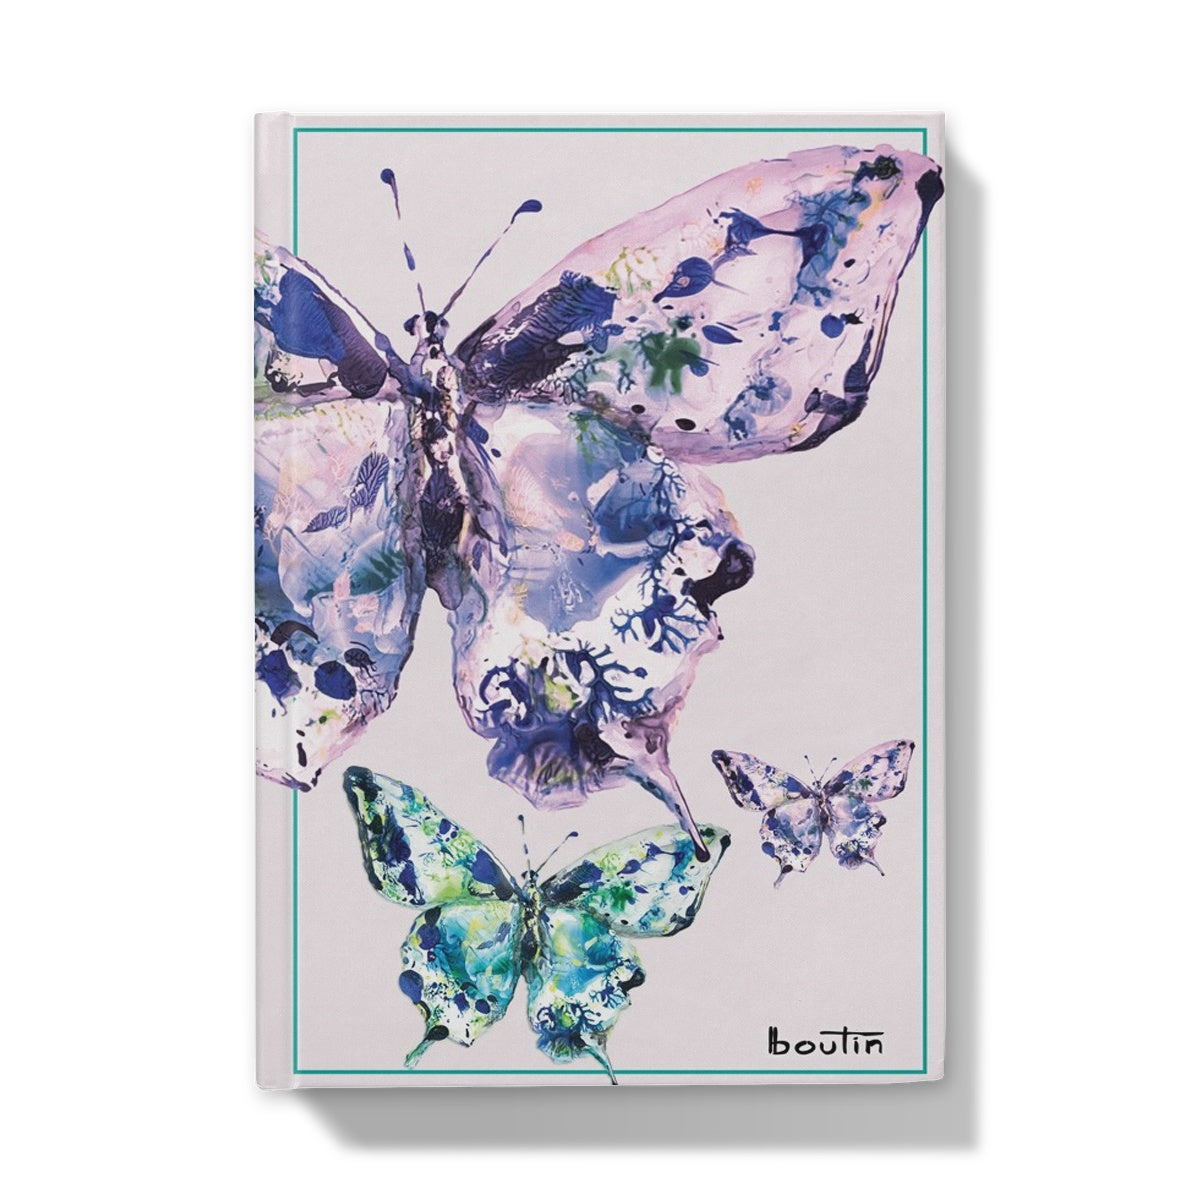 Lilac butterflies - Notebook by the artist Boutin